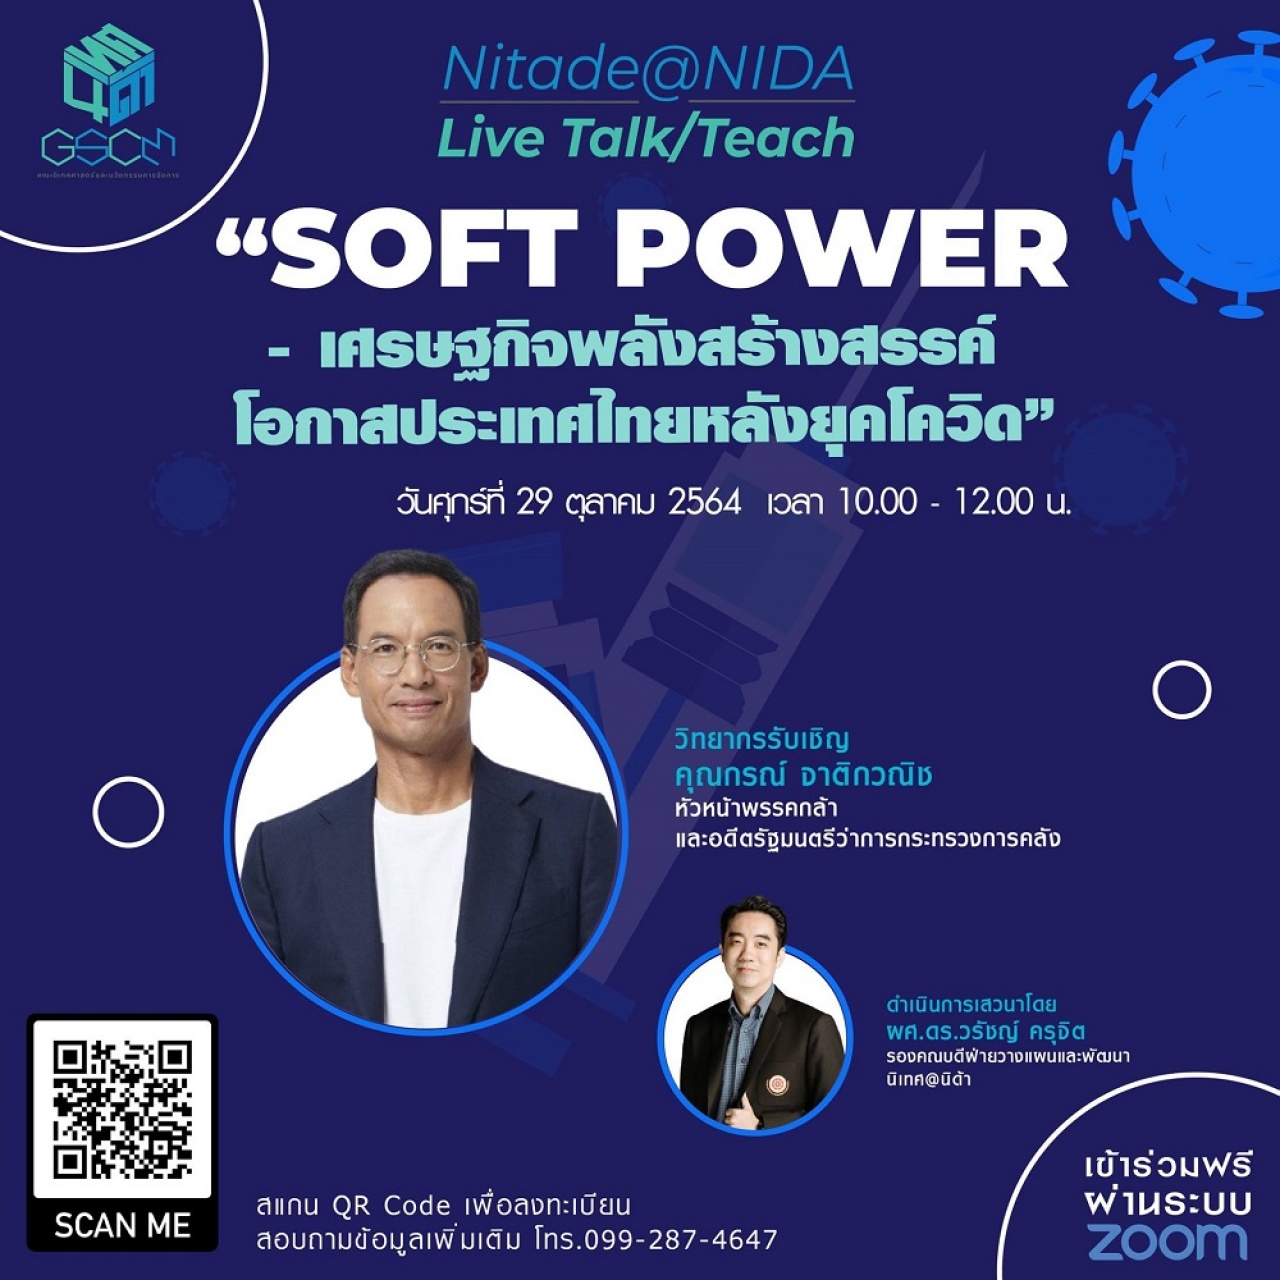 Nitade NIDA Live Talk-Teach หัวข้อ Soft Power - เศรษฐกิจพลังสร้างสรรค์ โอกาสประเทศไทยหลังยุคโควิด